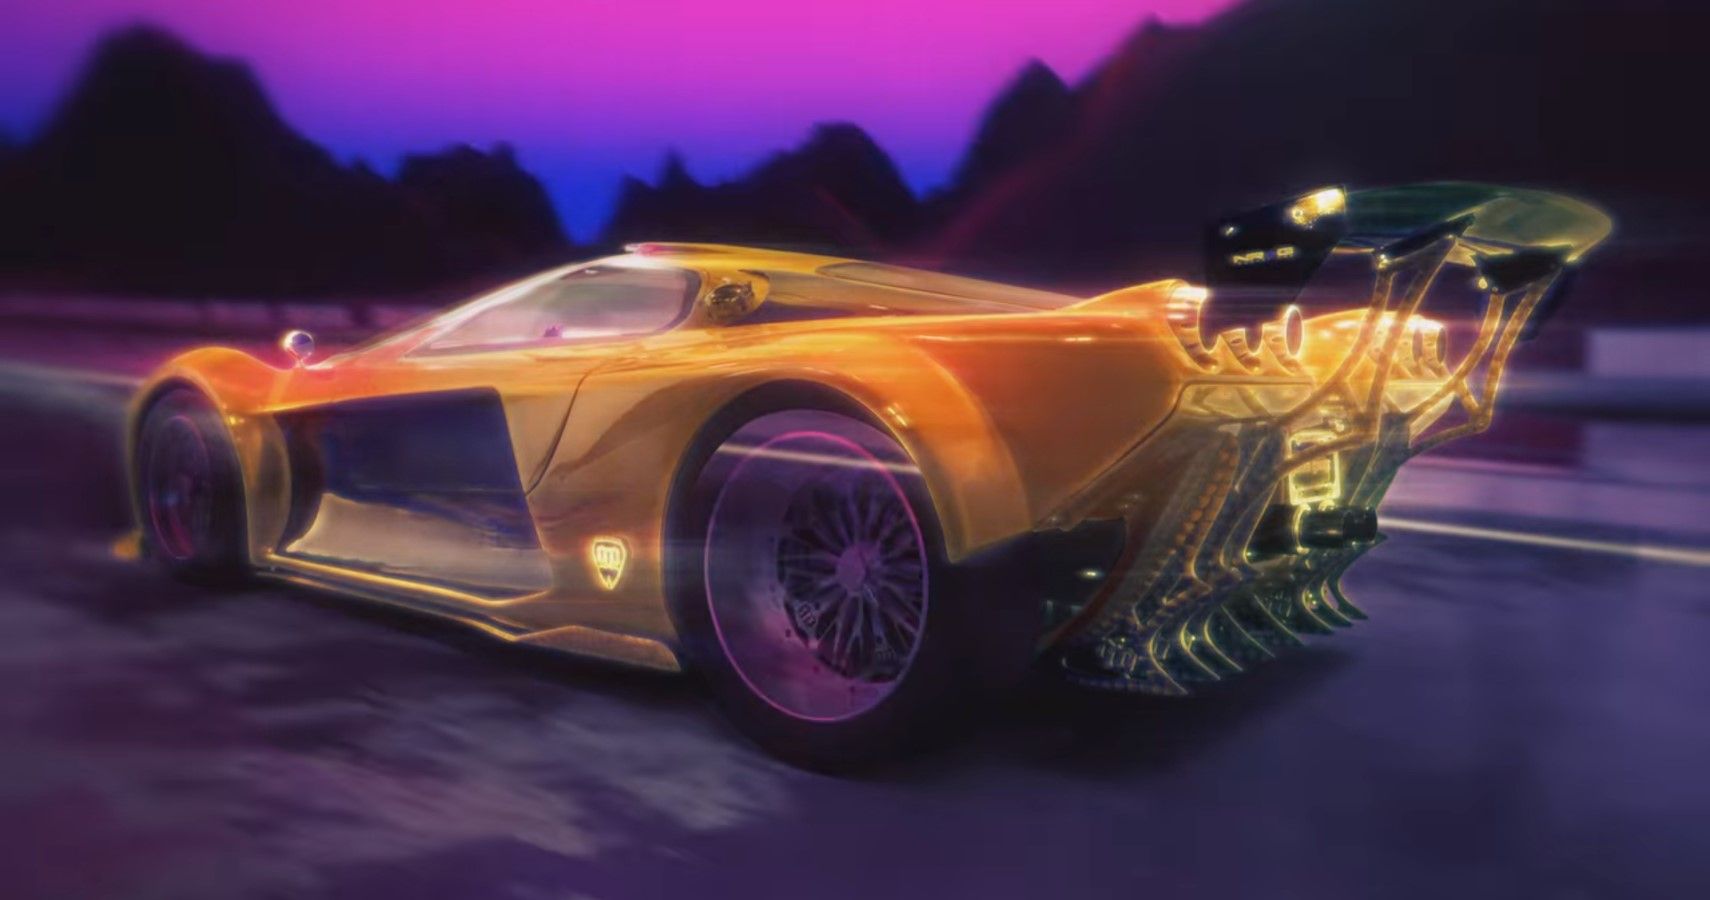 Gotham Garage Concept Car cinematic rear third quarter view